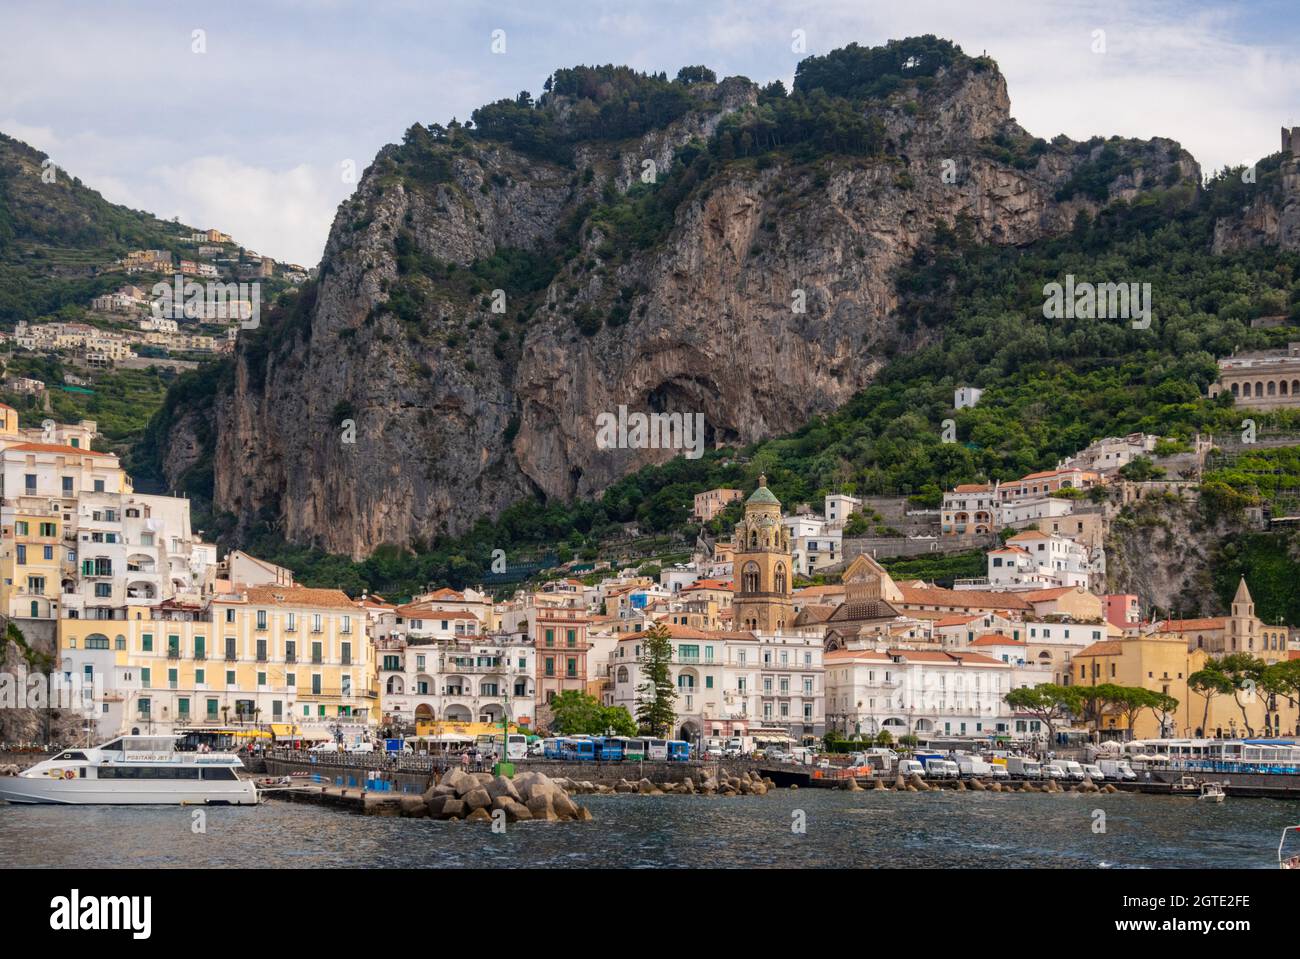 Ville d'Amalfi vue du large, Salerno, Campanis, Italie Banque D'Images